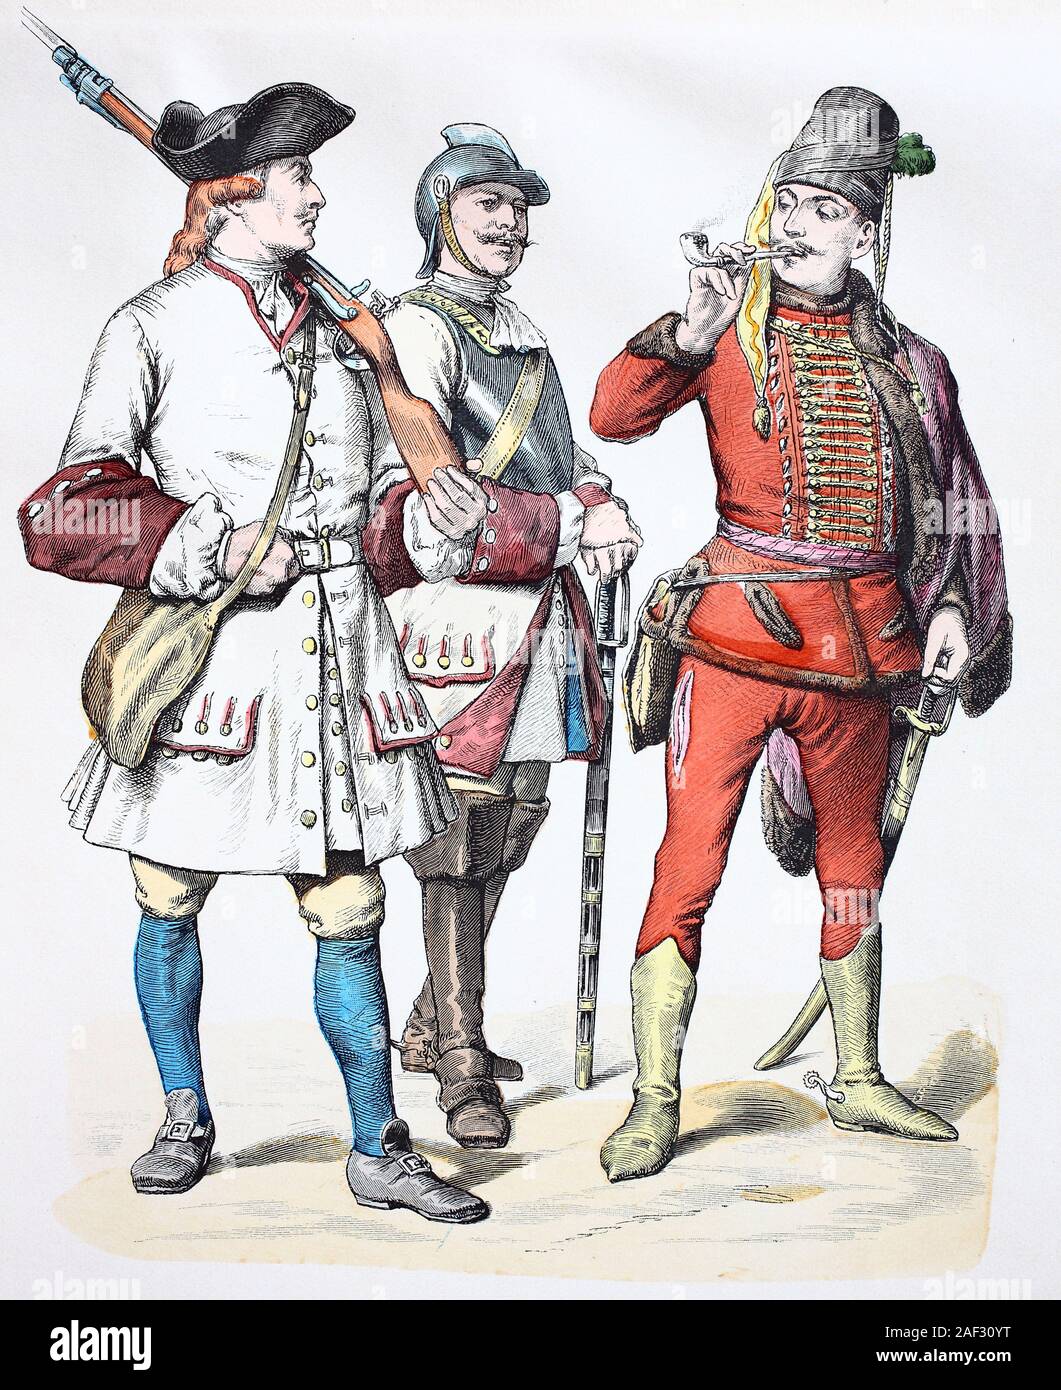 Il costume nazionale, vestiti, la storia del costume, uniforme militare da Austria, nel 1728, Volkstracht, Kleidung, Geschichte der Kostüme, Militäruniform aus Österreich, 1728 Foto Stock